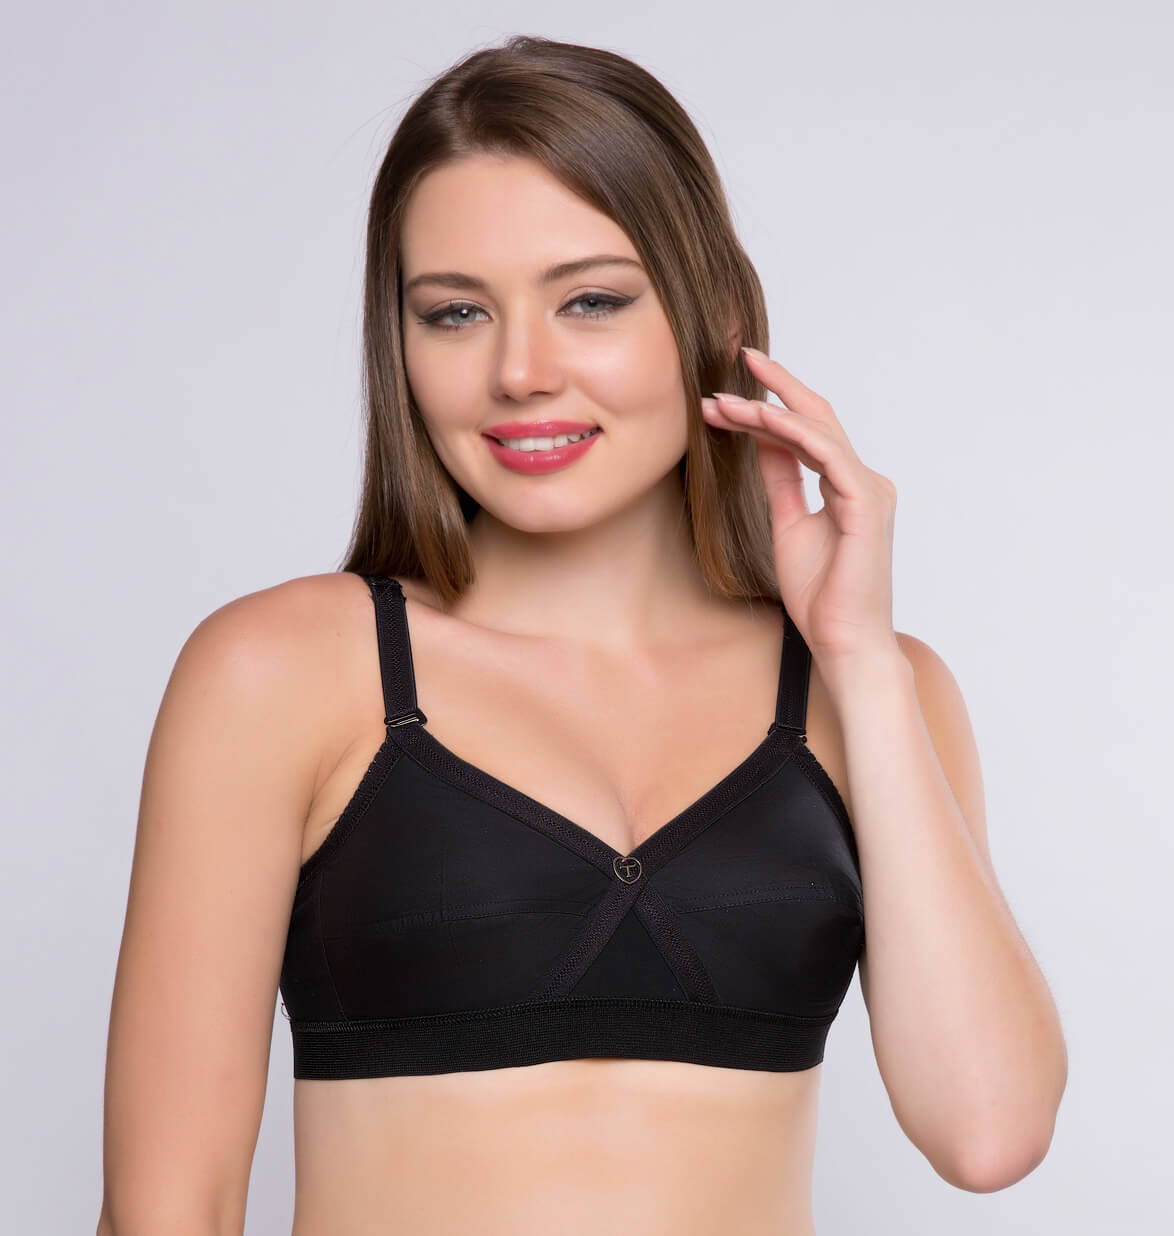 Riza World - Presenting Krutika Plain, an ideal bra for routine